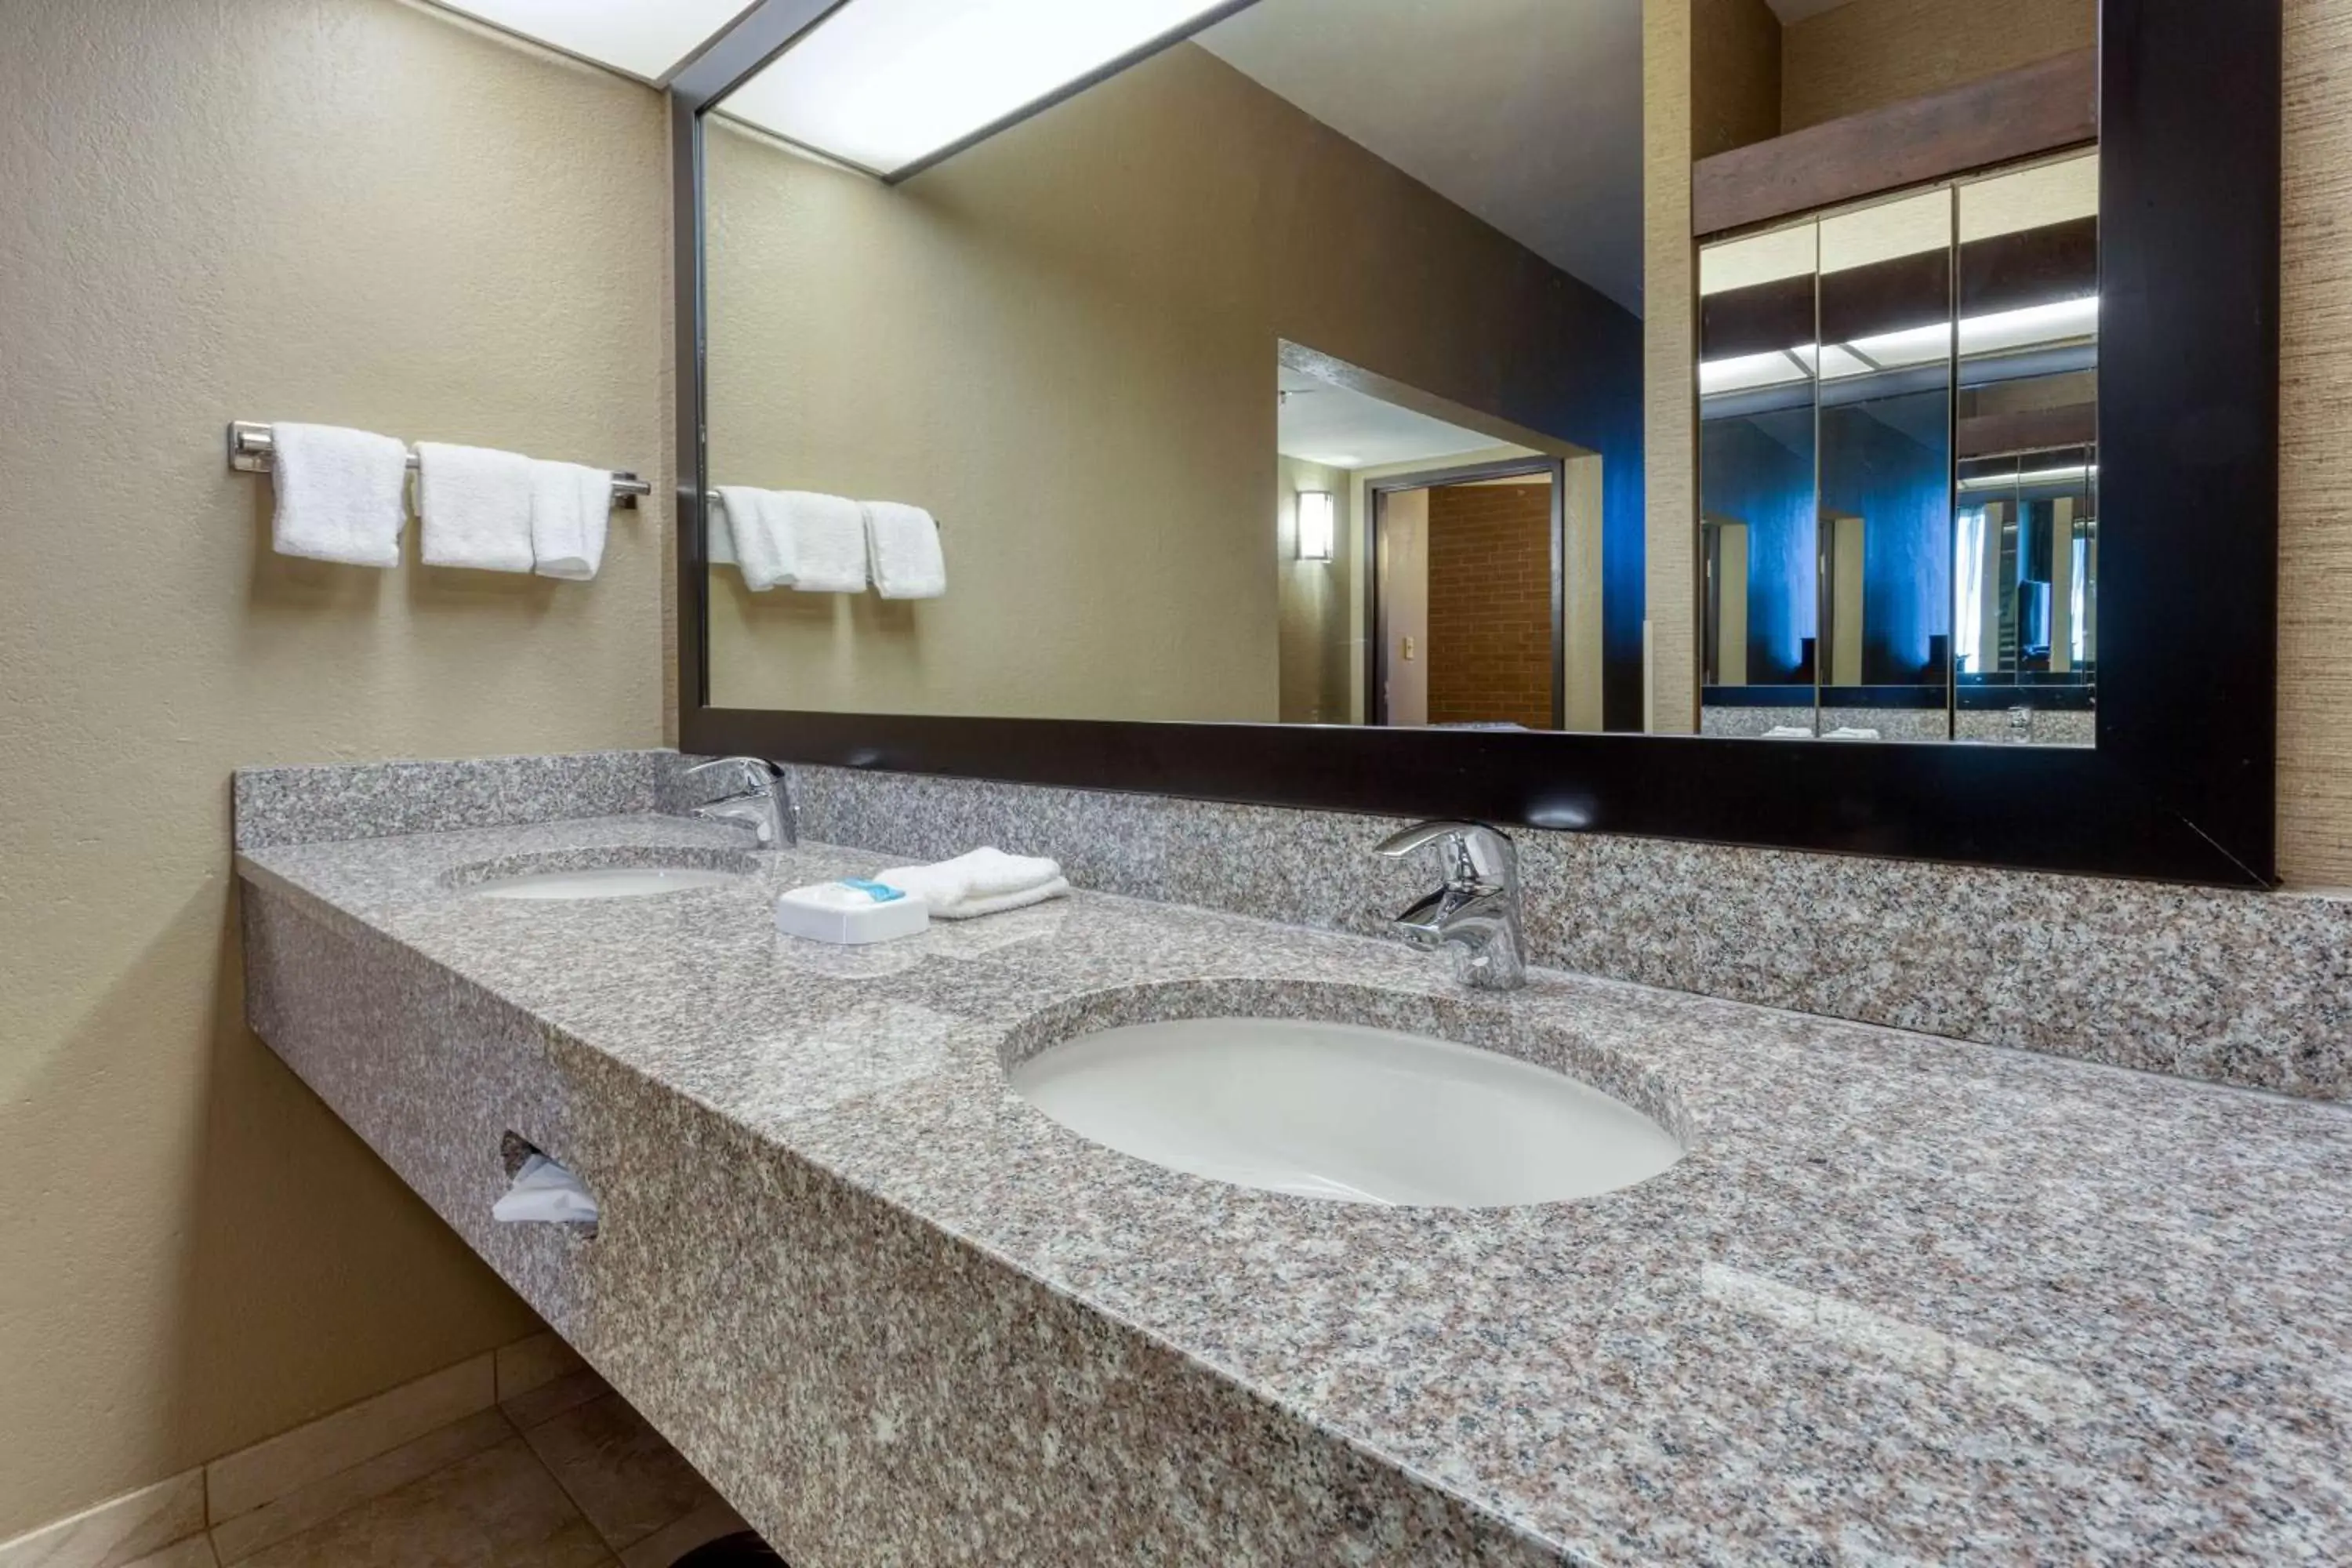 Photo of the whole room, Bathroom in Drury Inn & Suites Atlanta Morrow